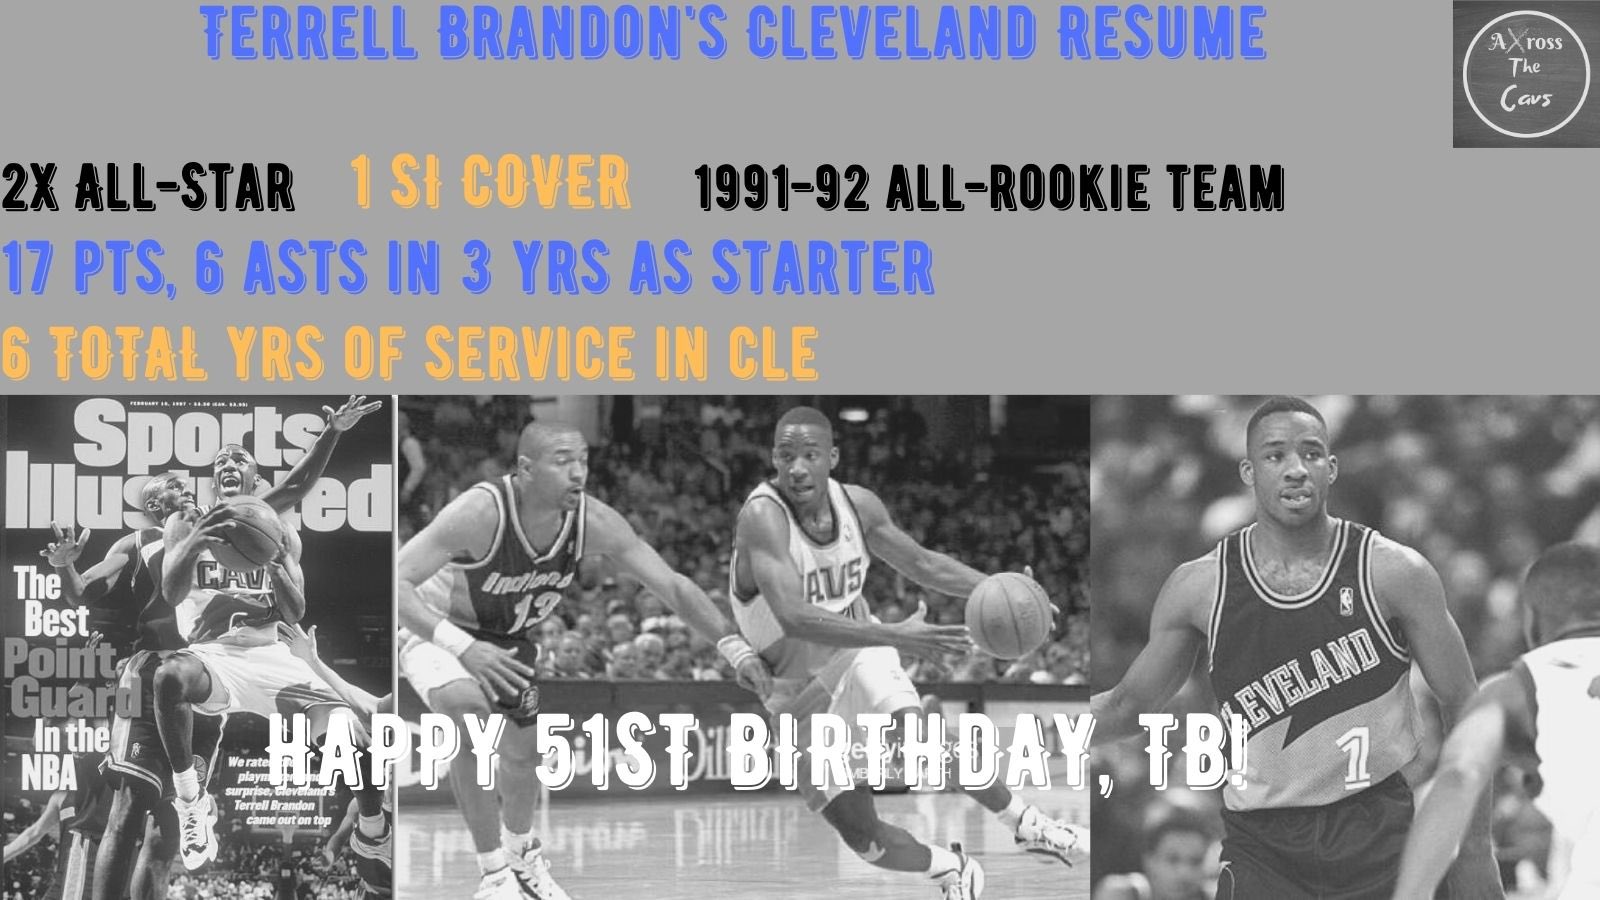 Happy birthday Terrell Brandon! 